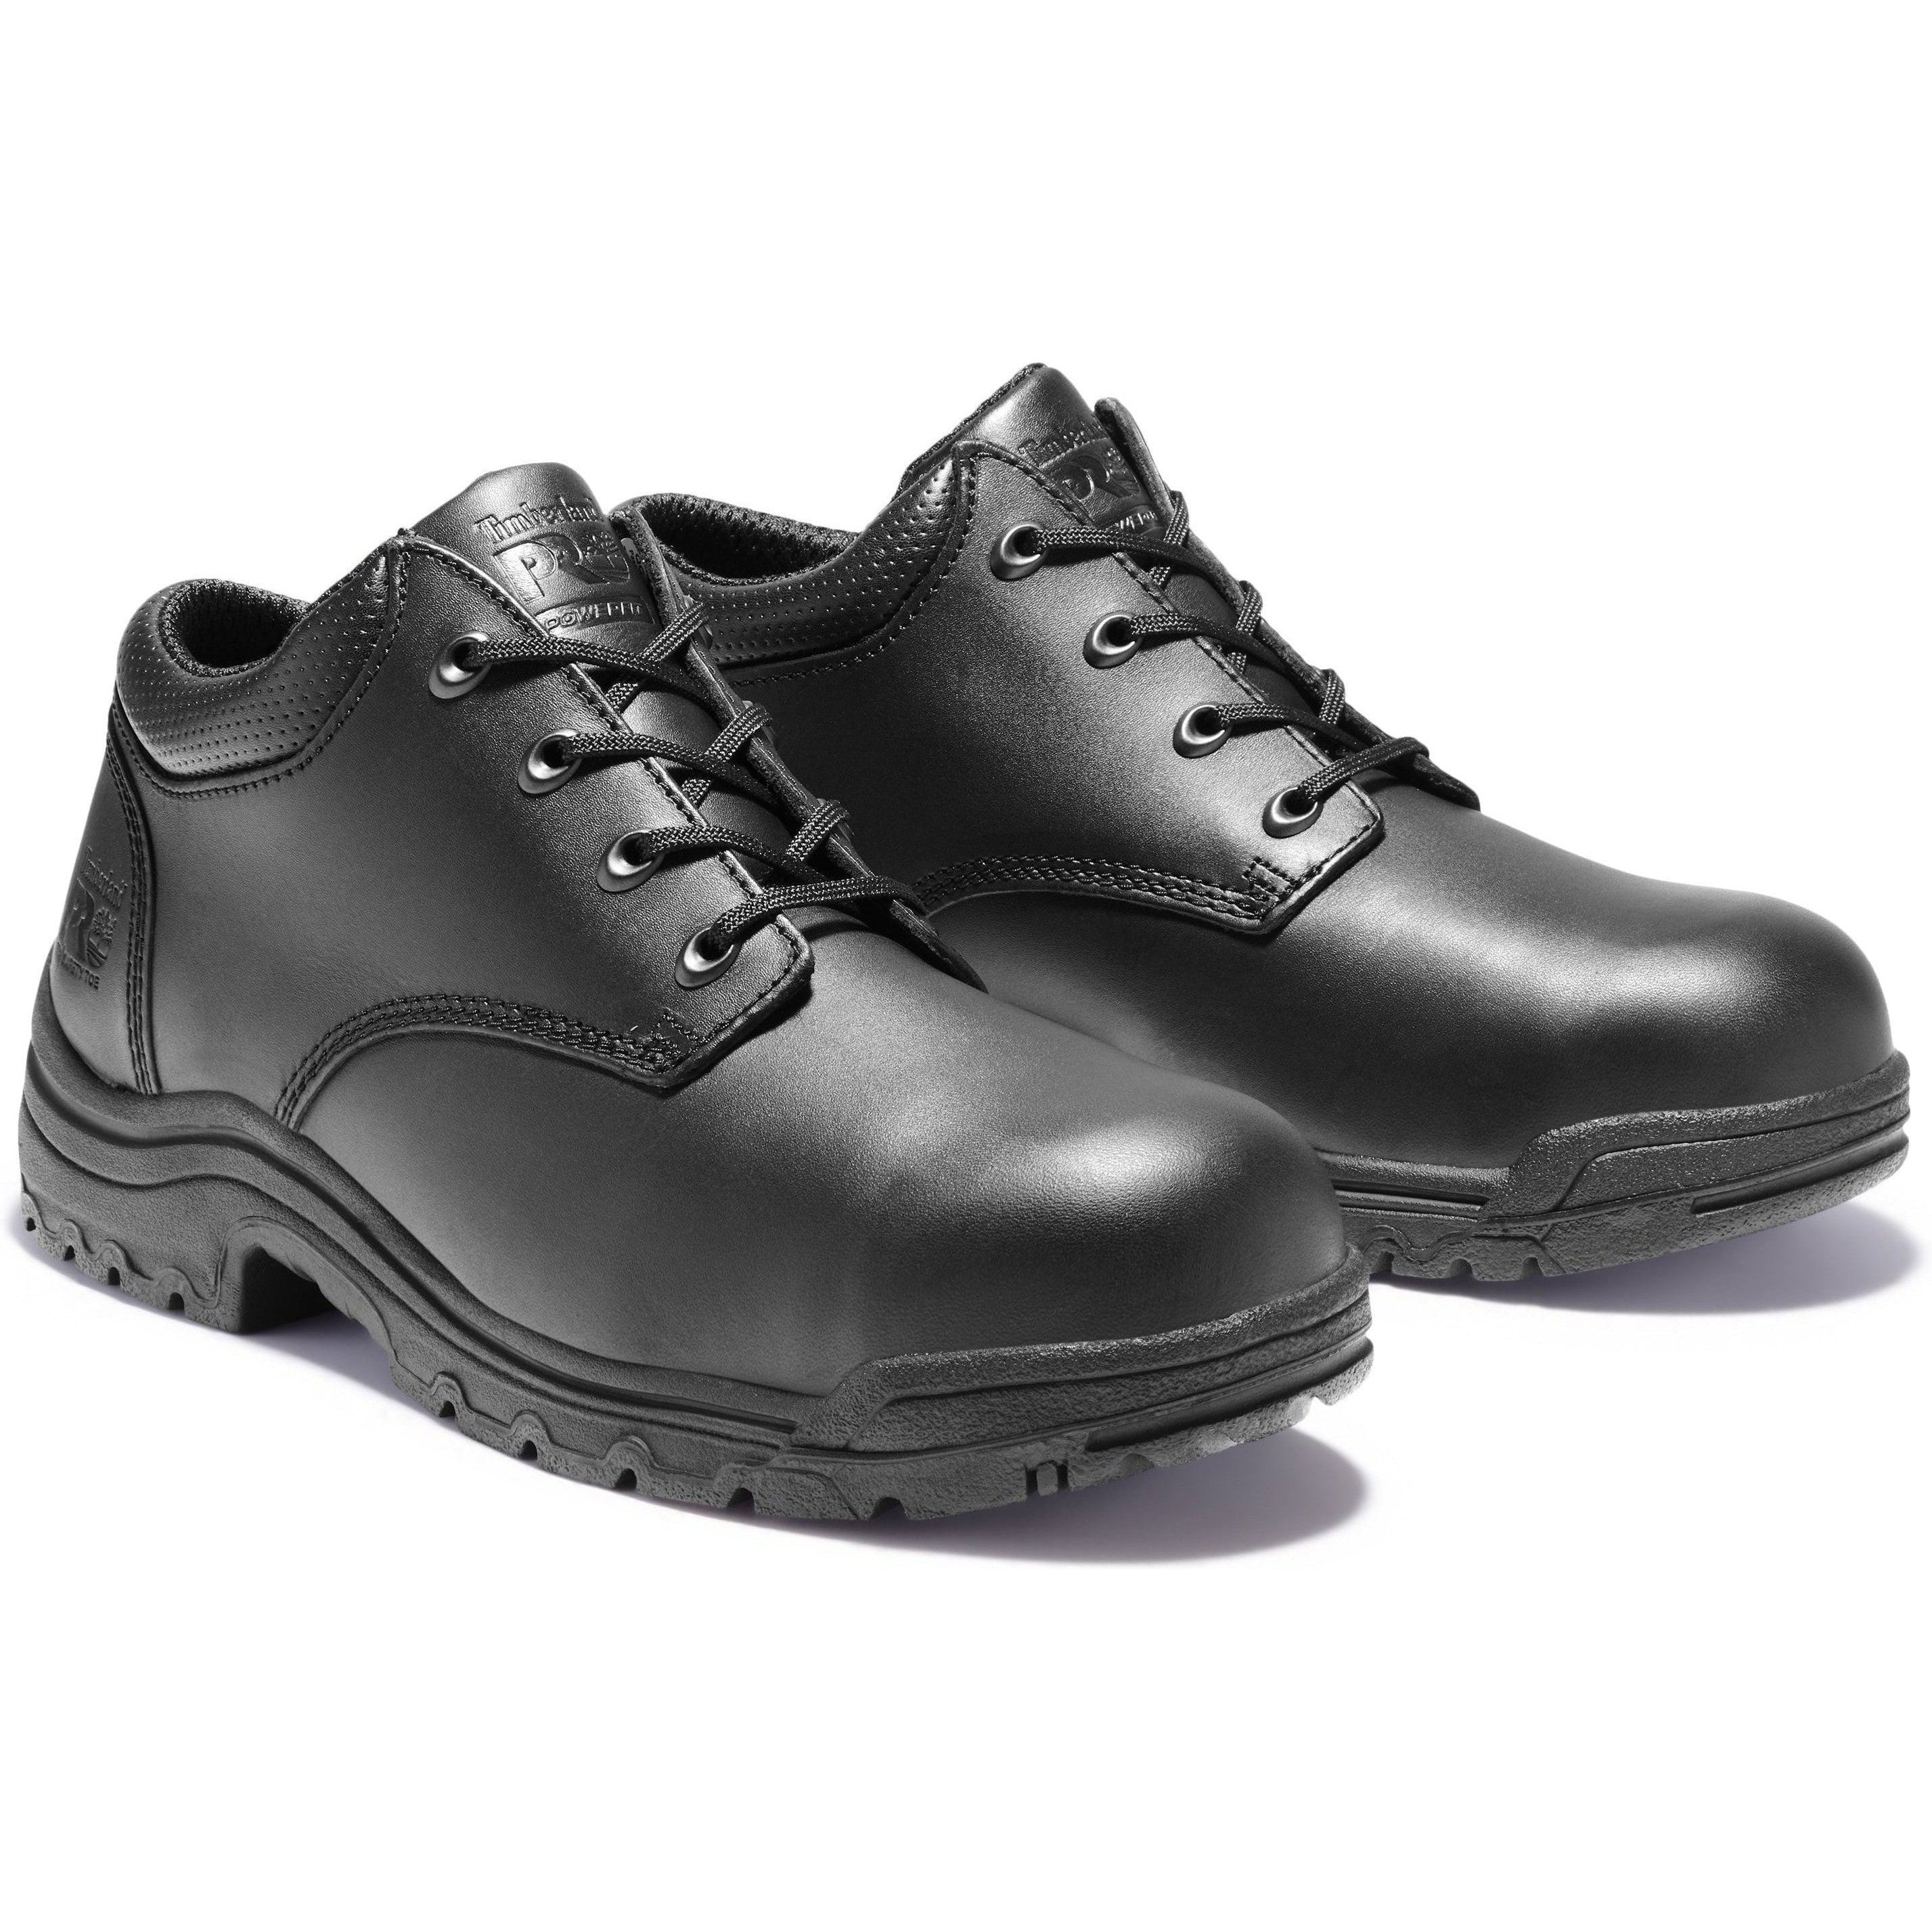 Timberland PRO Men's TiTAN Oxford Alloy Toe Work Shoe Black TB040044001 7 / Medium / Black - Overlook Boots